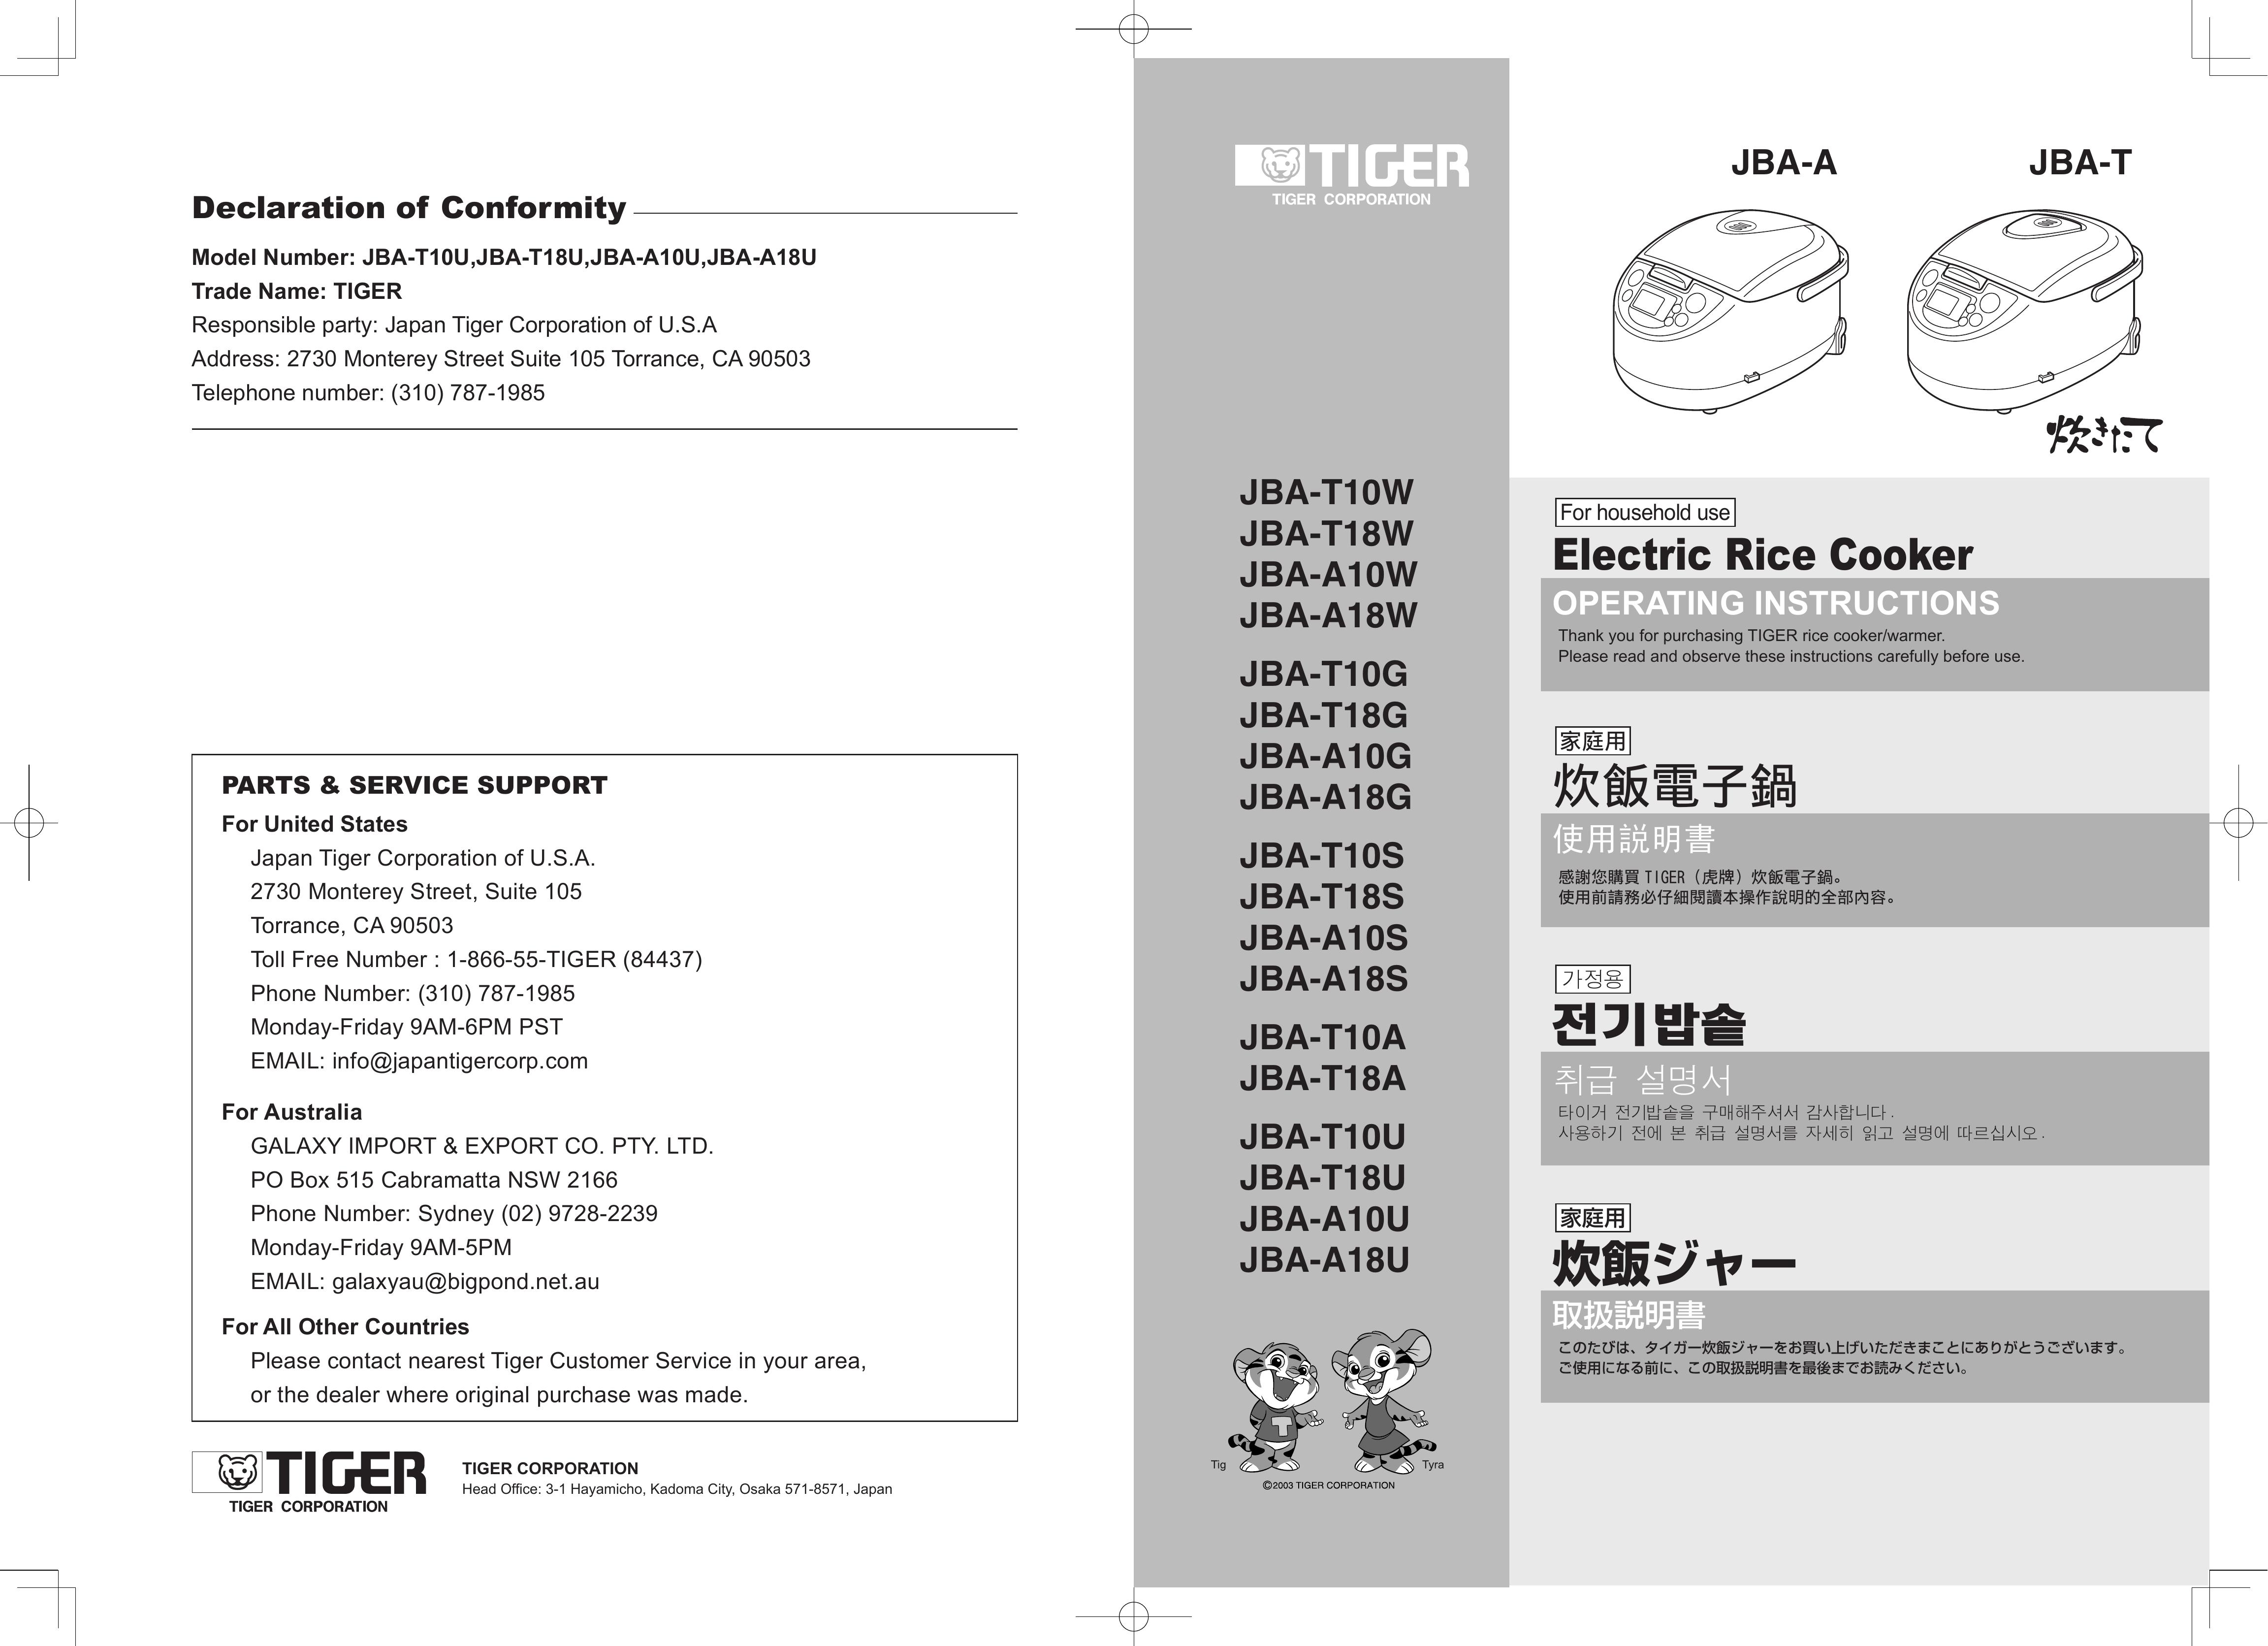 Tiger Products Co., Ltd JBA-T10A Rice Cooker User Manual